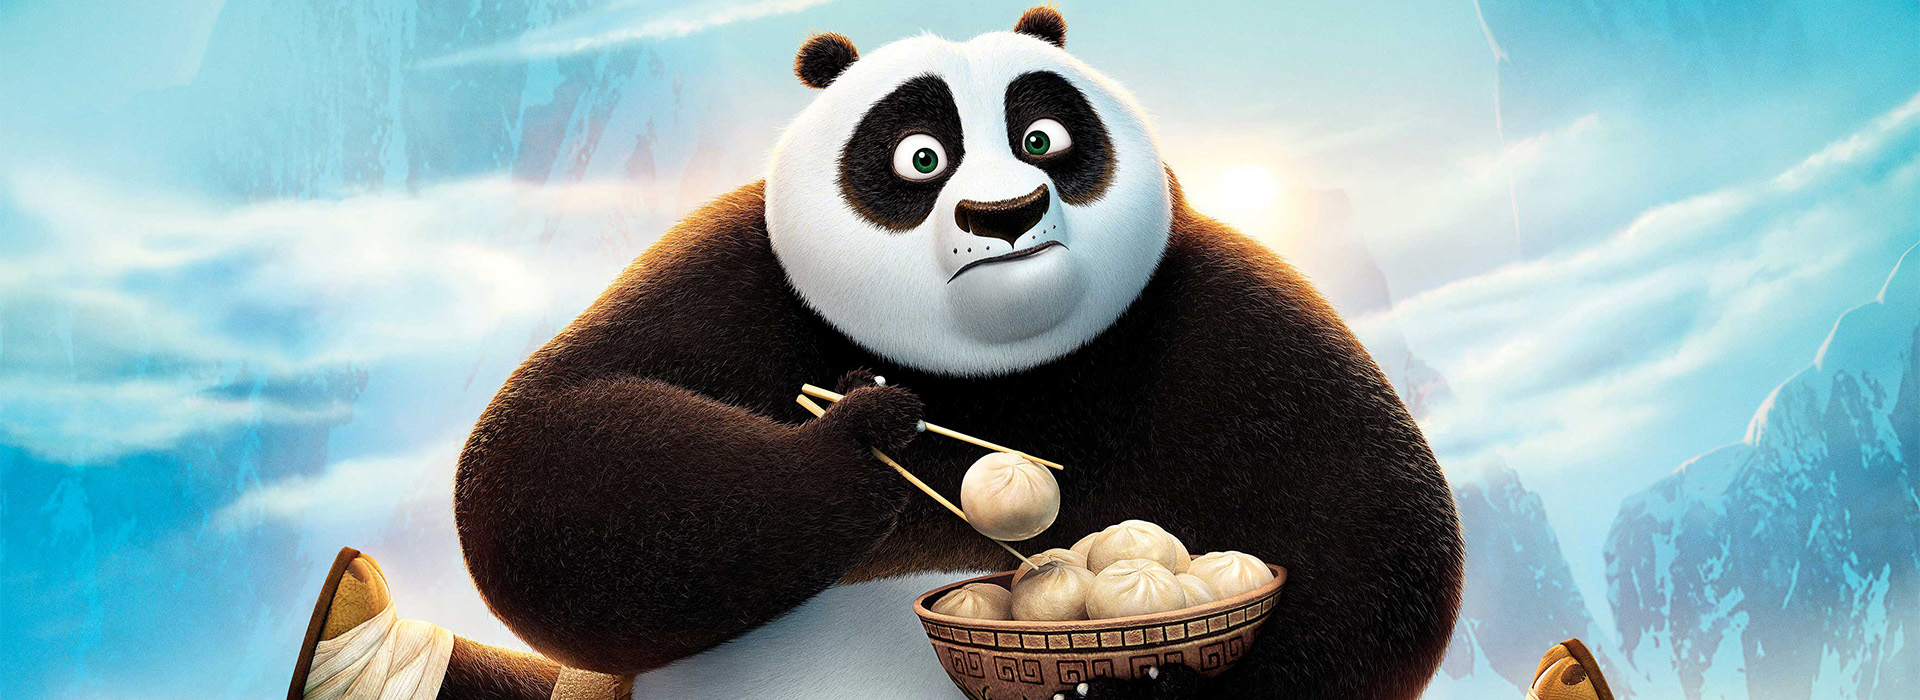 Movie poster Kung Fu Panda 3